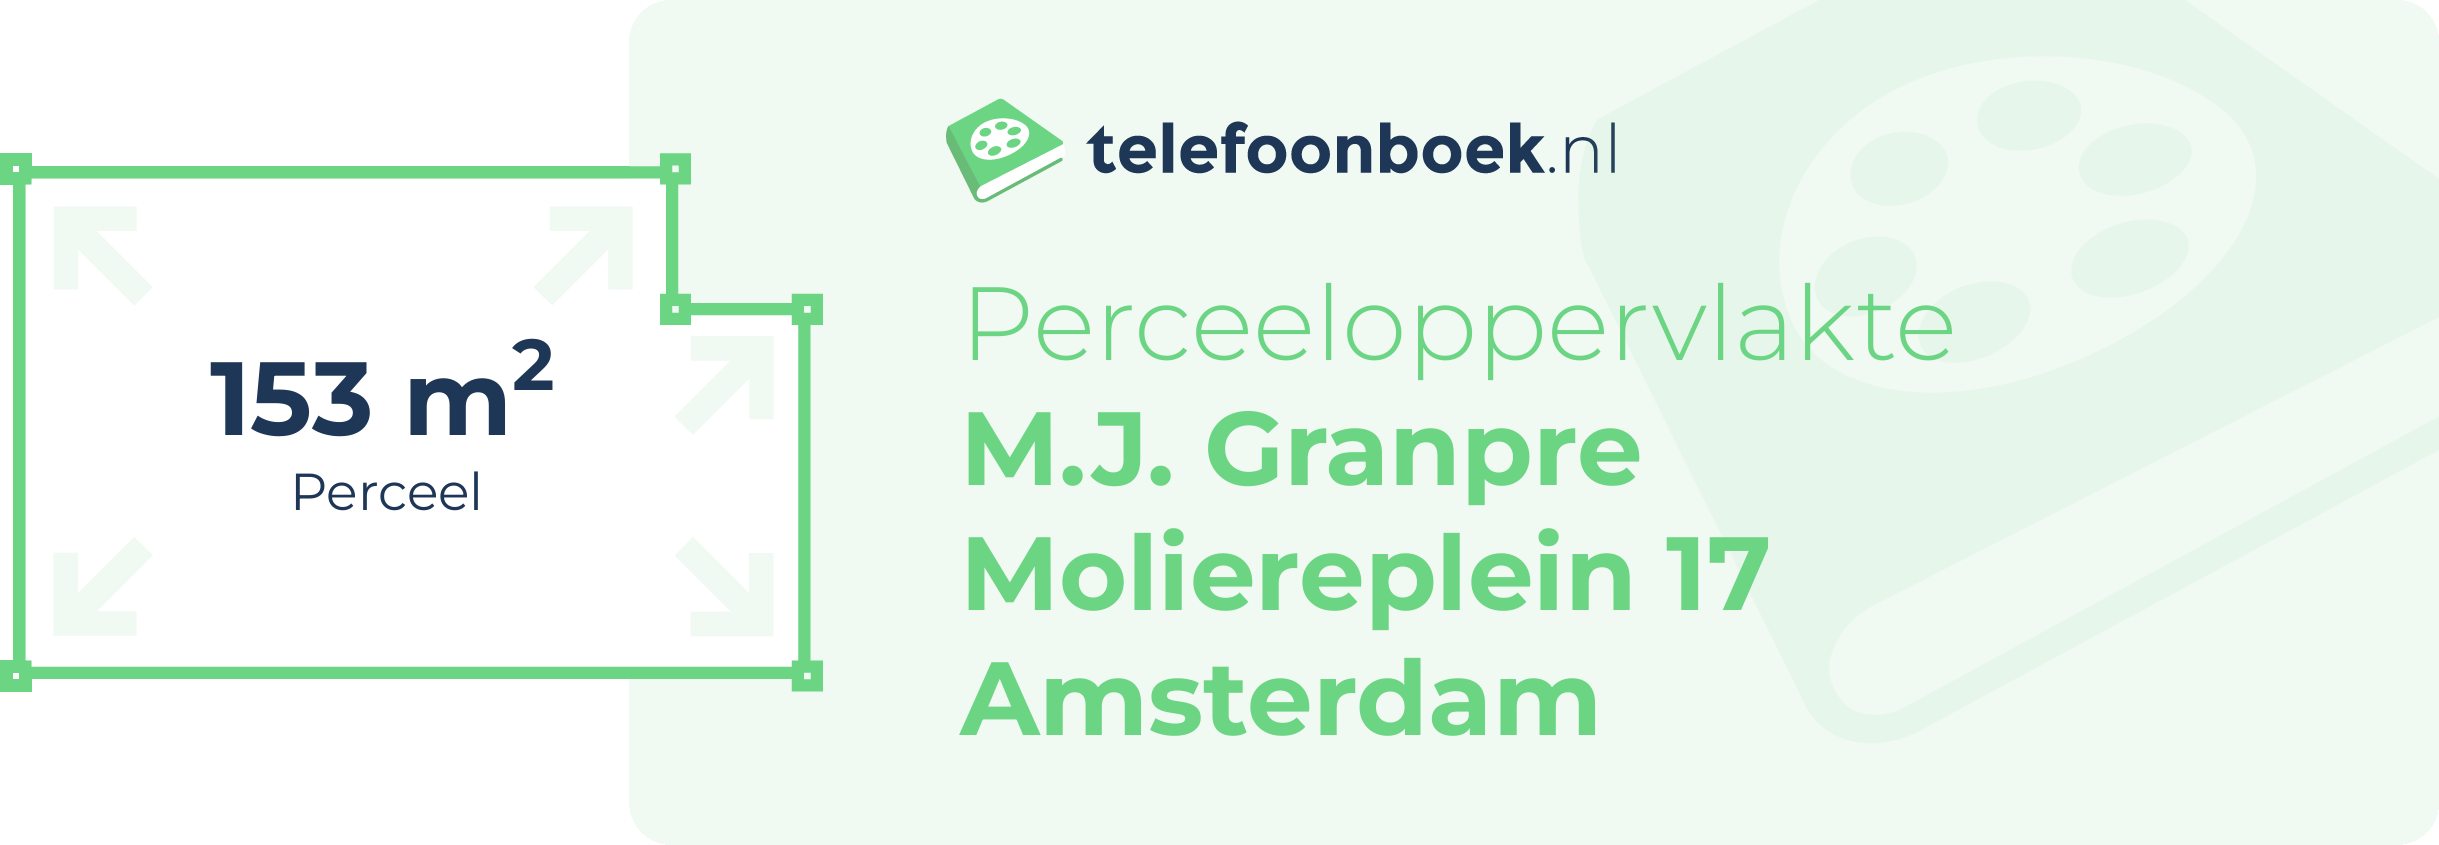 Perceeloppervlakte M.J. Granpre Moliereplein 17 Amsterdam